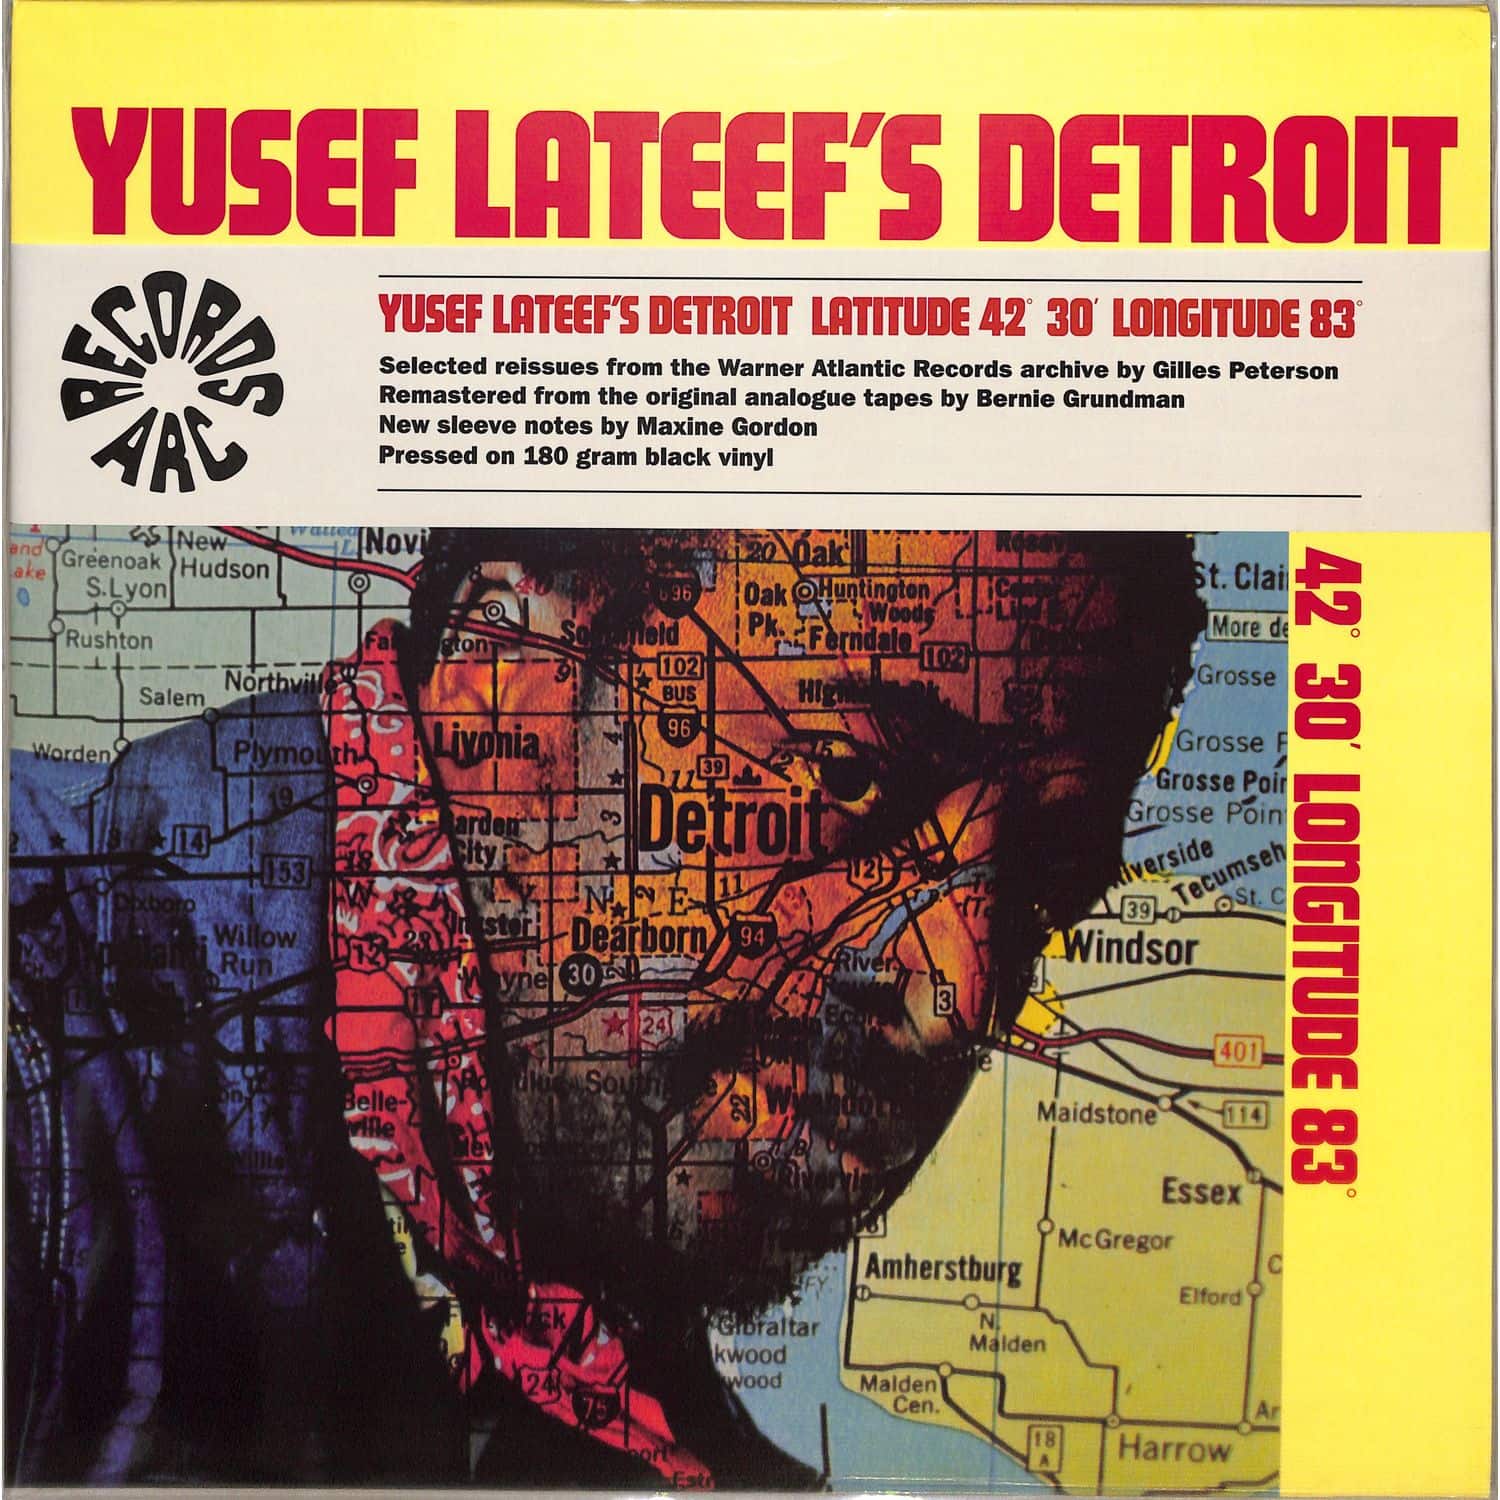 Yusef Lateef - YUSEF LATEEFS DETROIT LATITUDE 42 30 LONGITUDE 83 